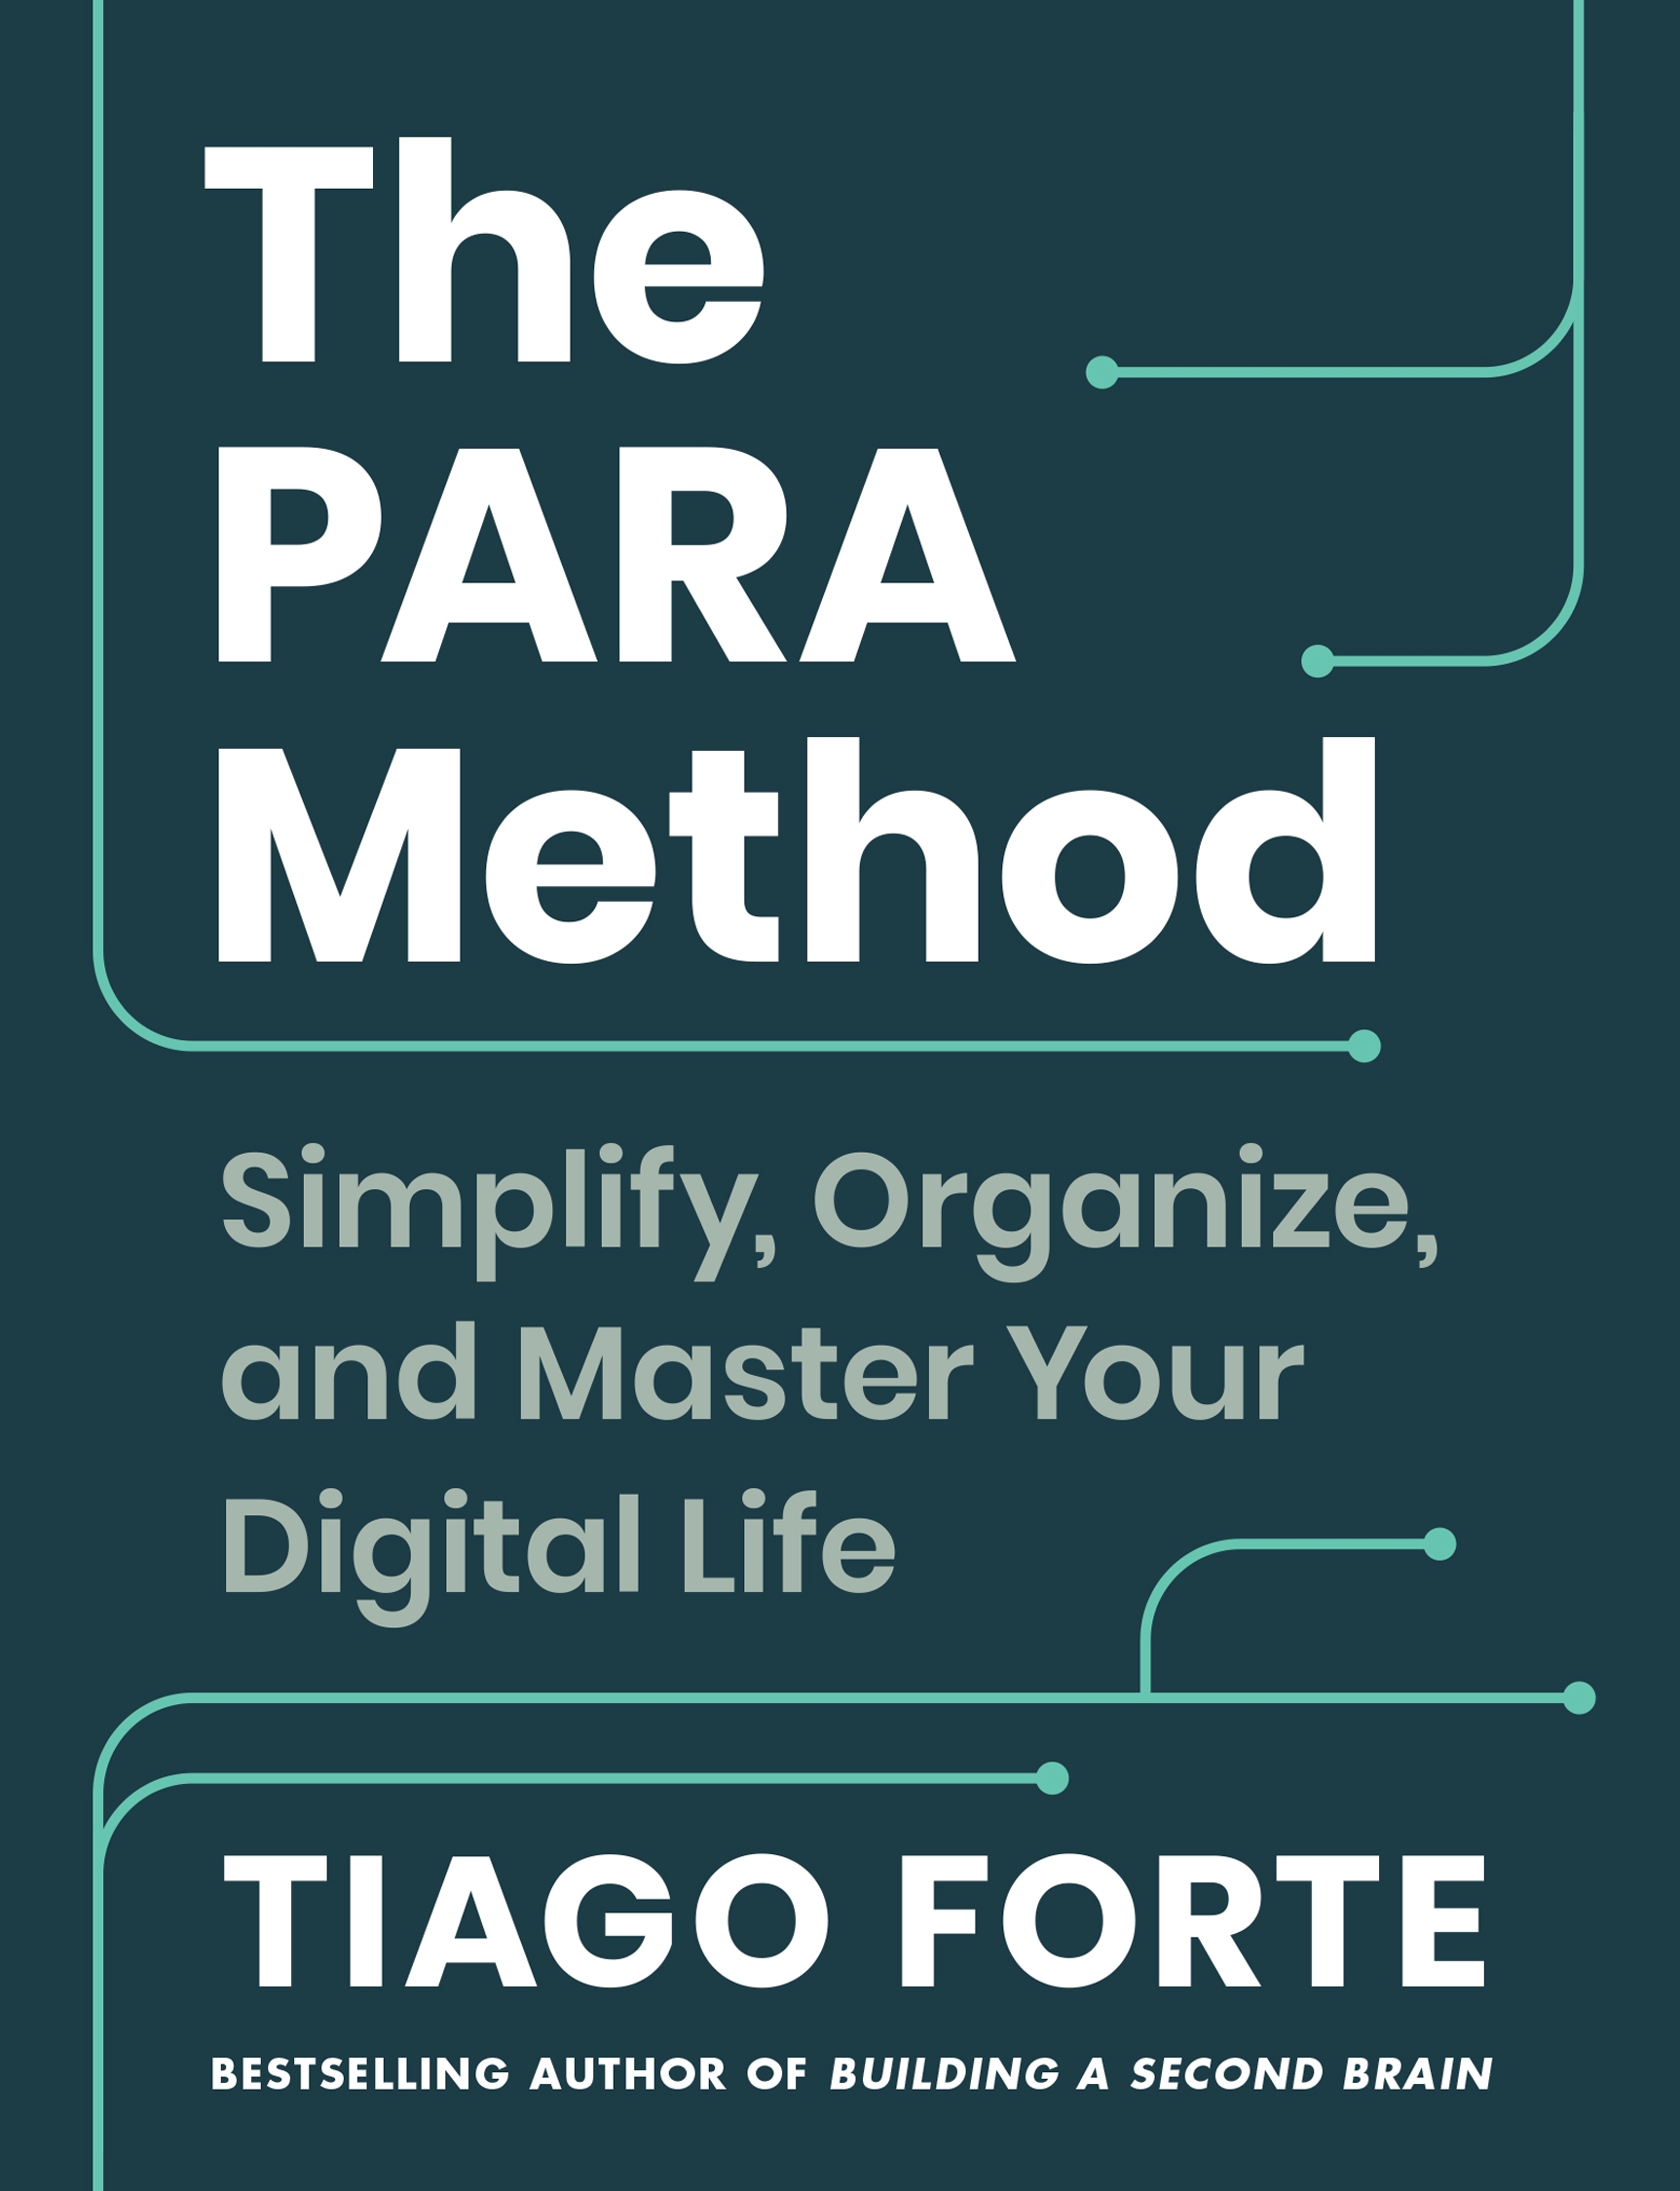 The PARA Method